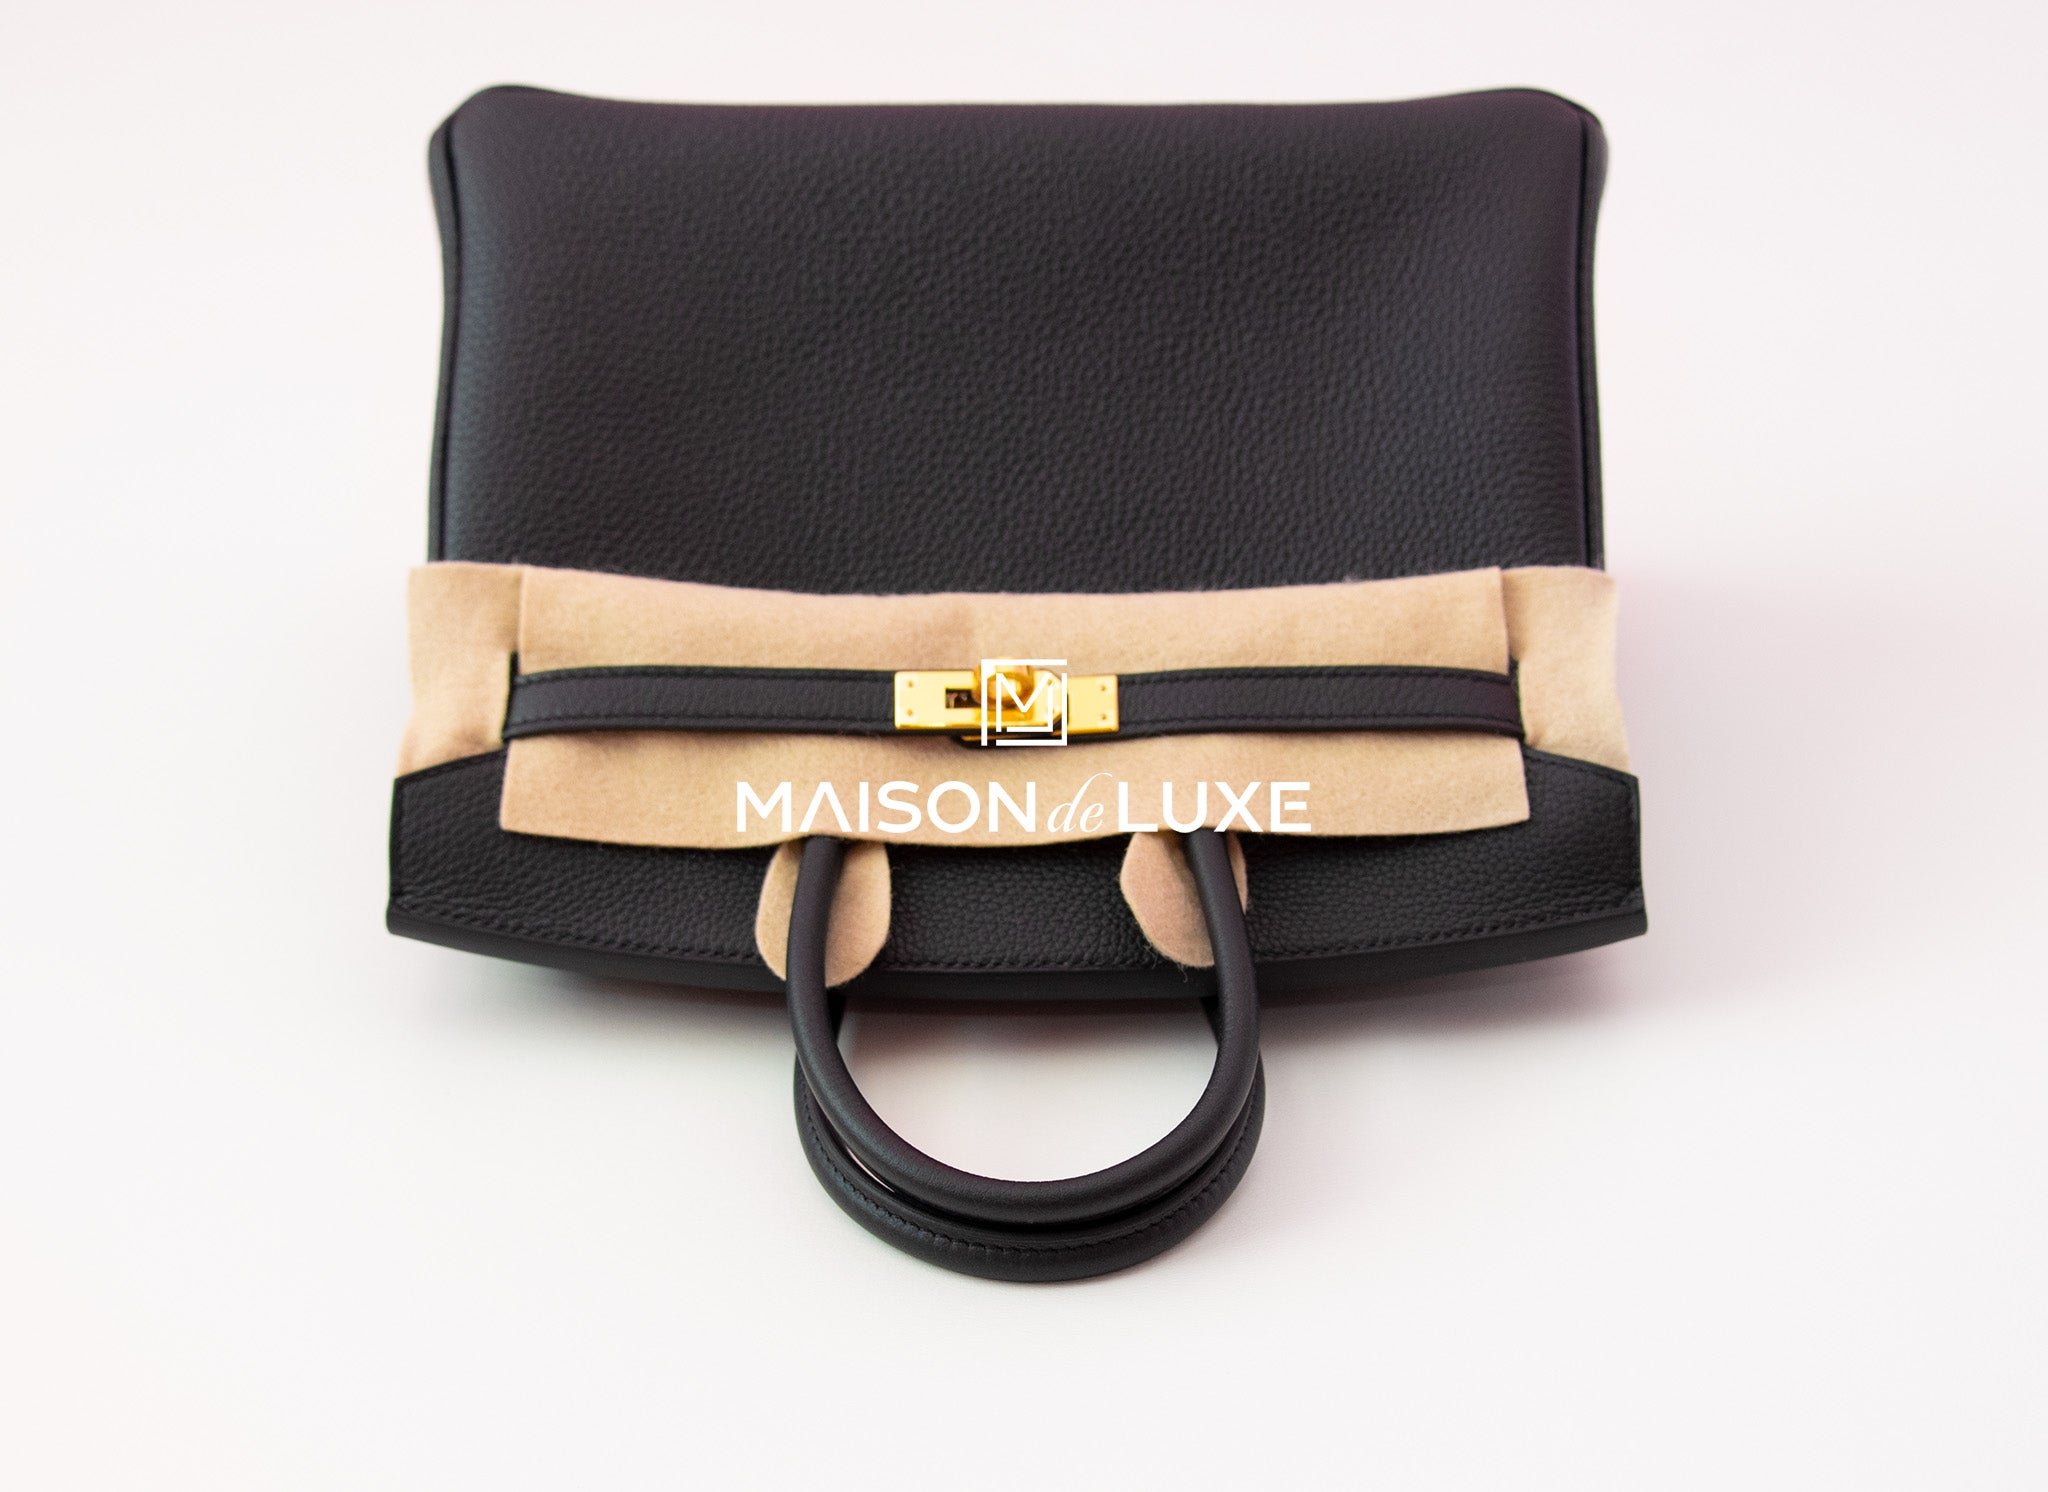 Hermes Birkin 25 Black Bag Gold Hardware Togo Leather – Mightychic